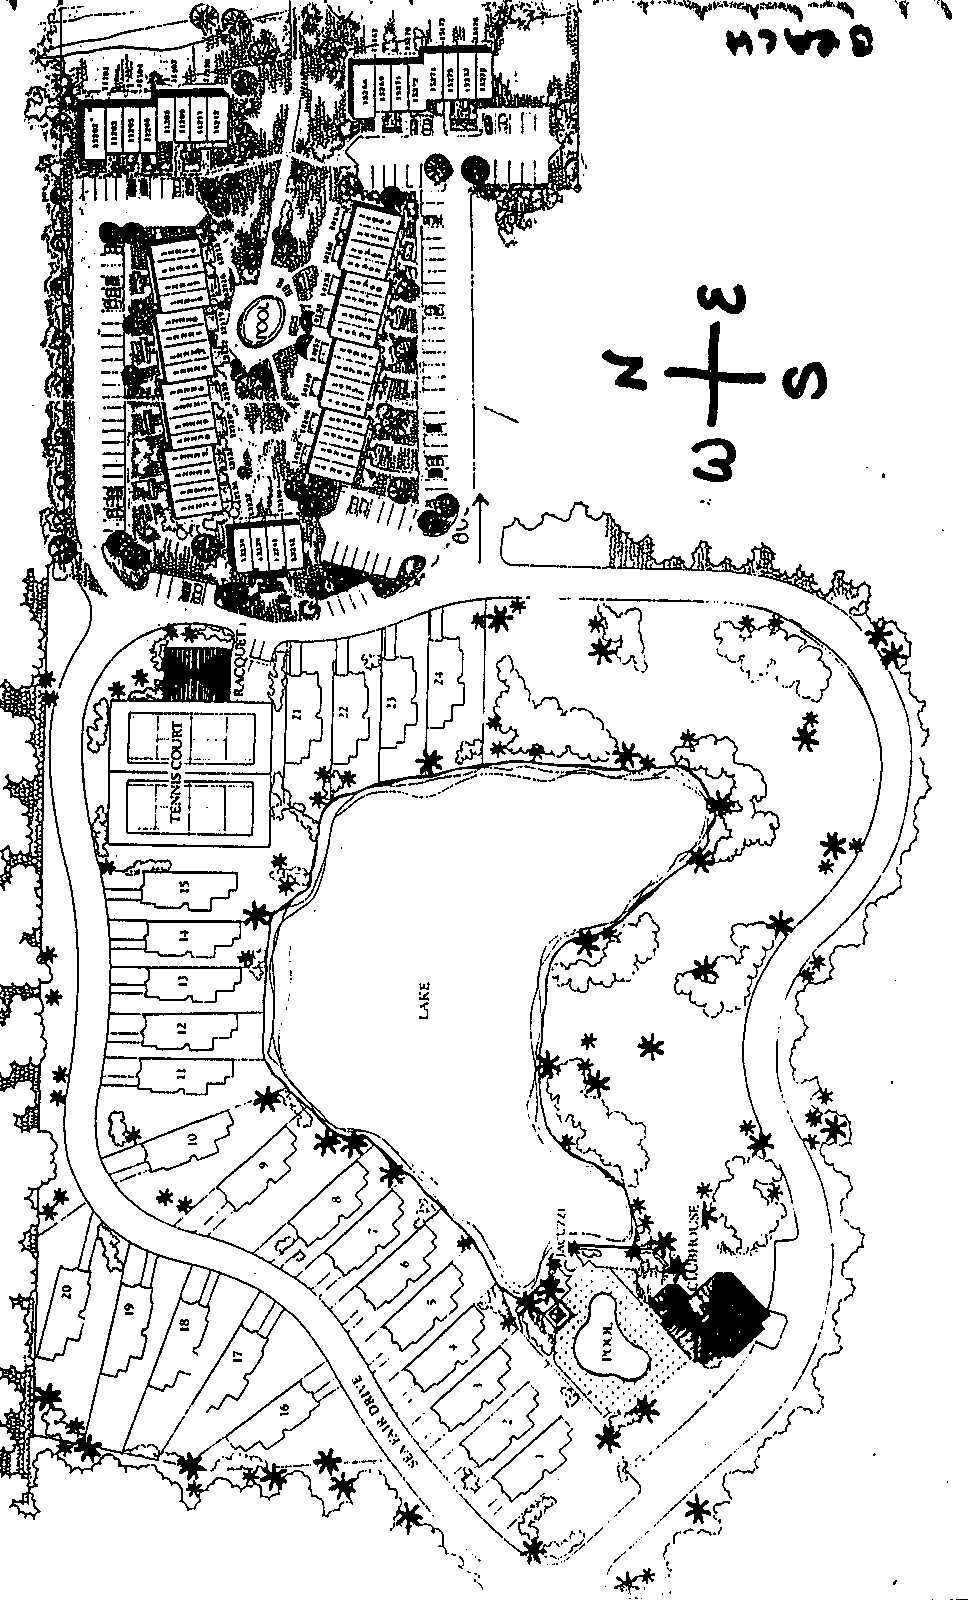 St Augustine Condos - Sea Place Site plan